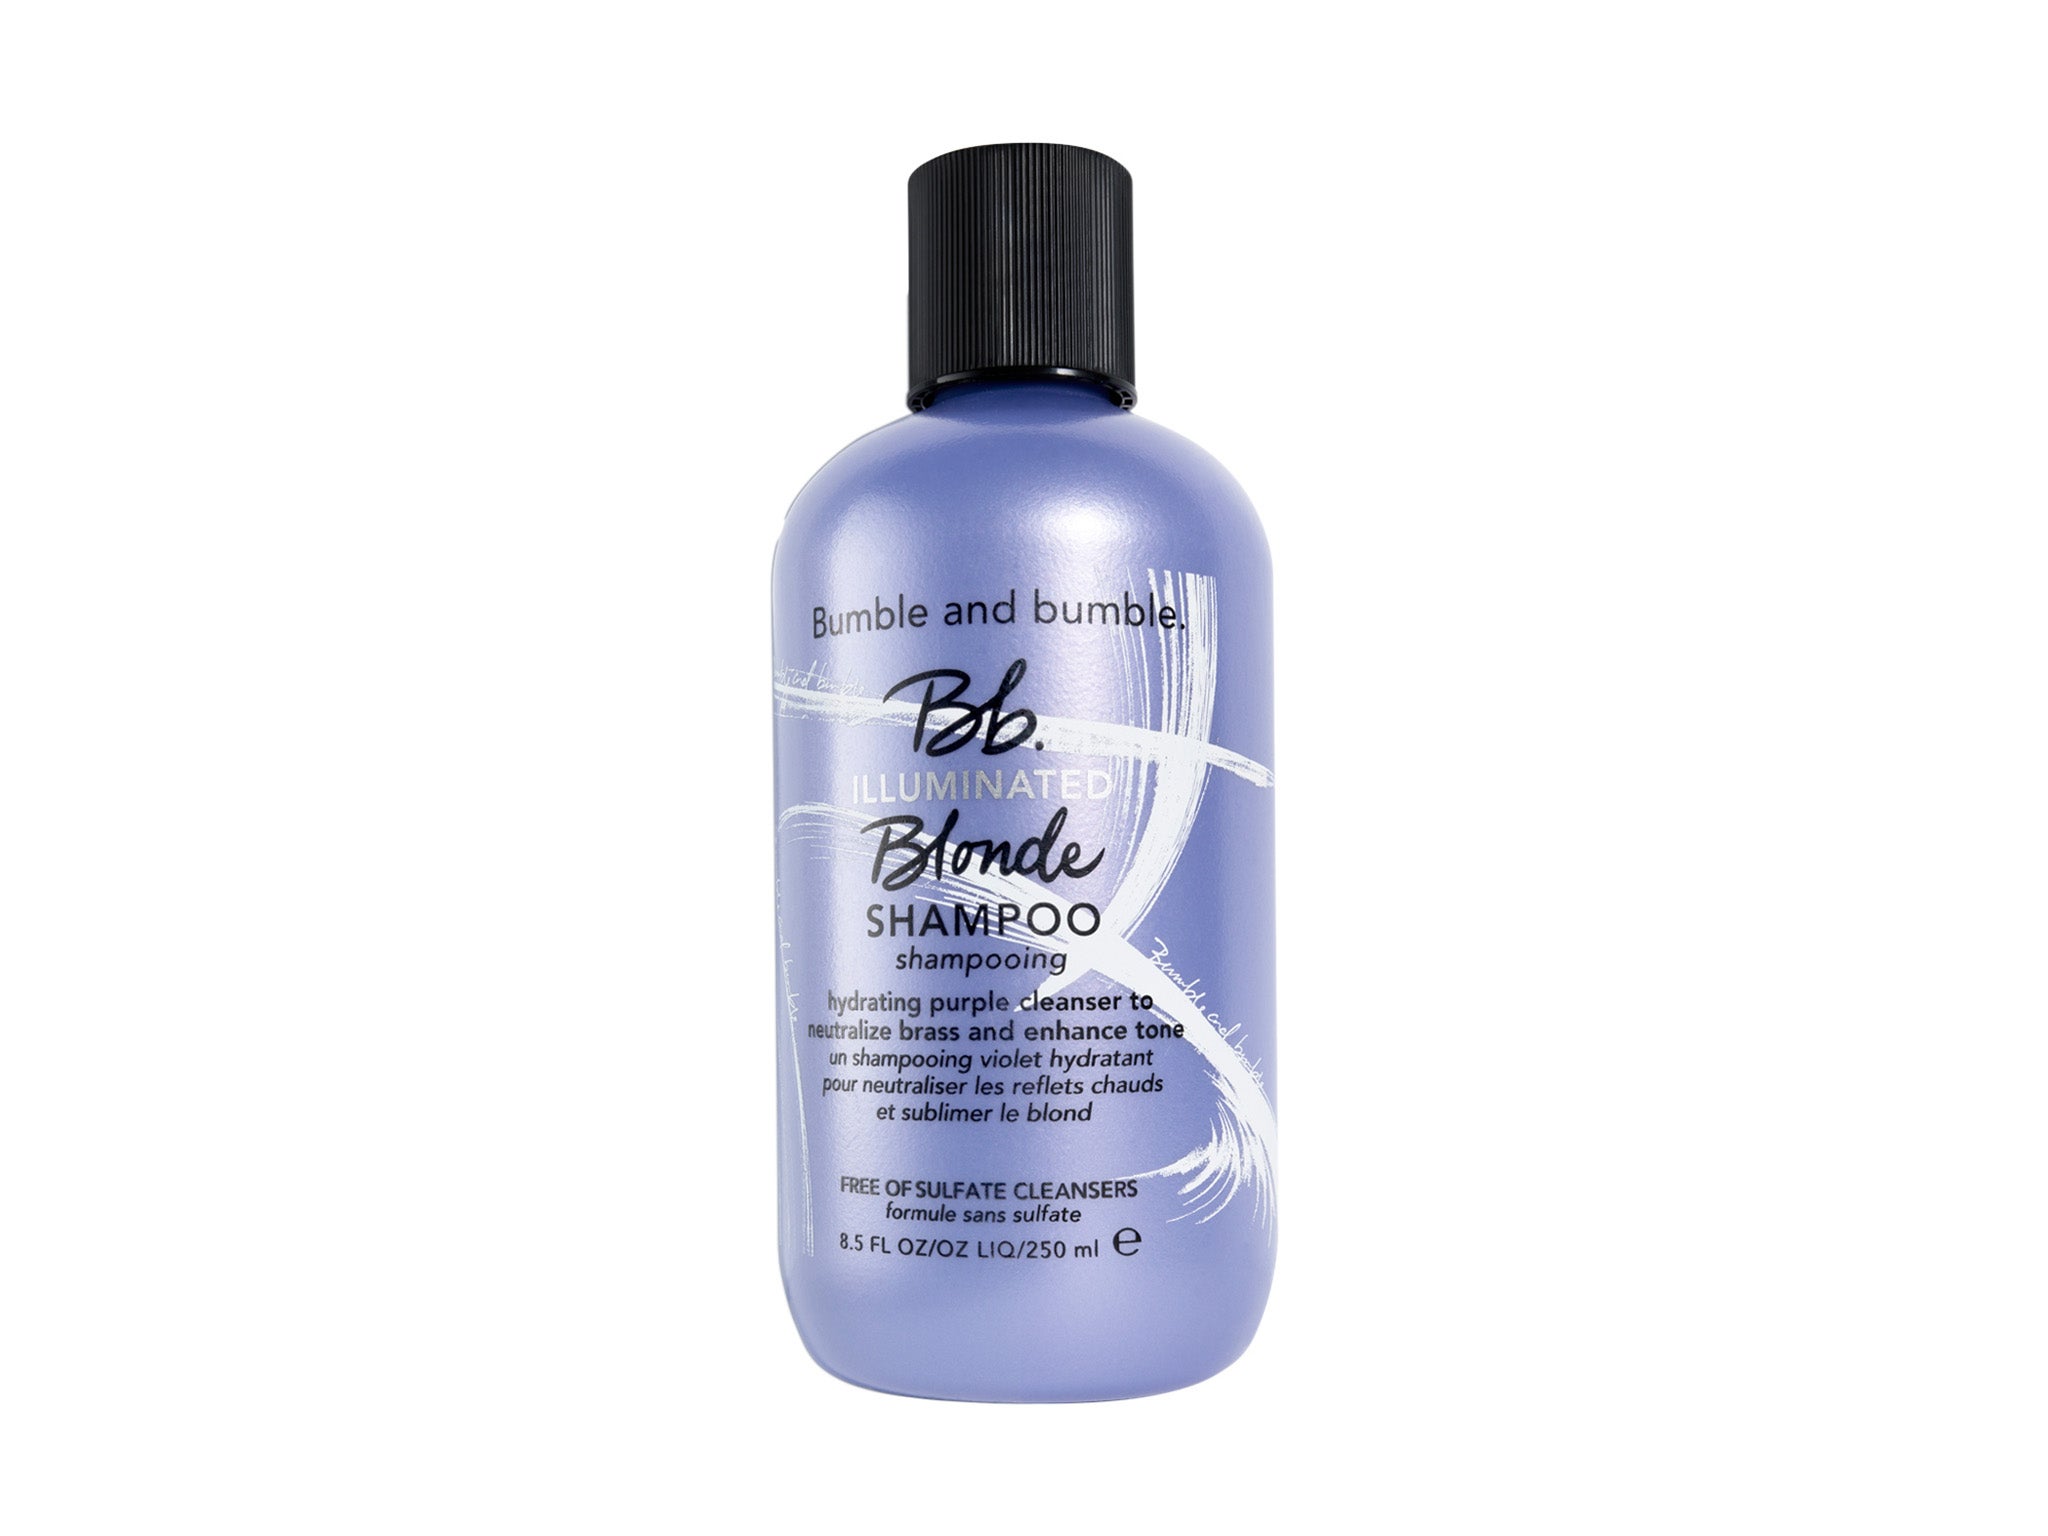 Bumble and Bumble illuminated blonde purple shampoo